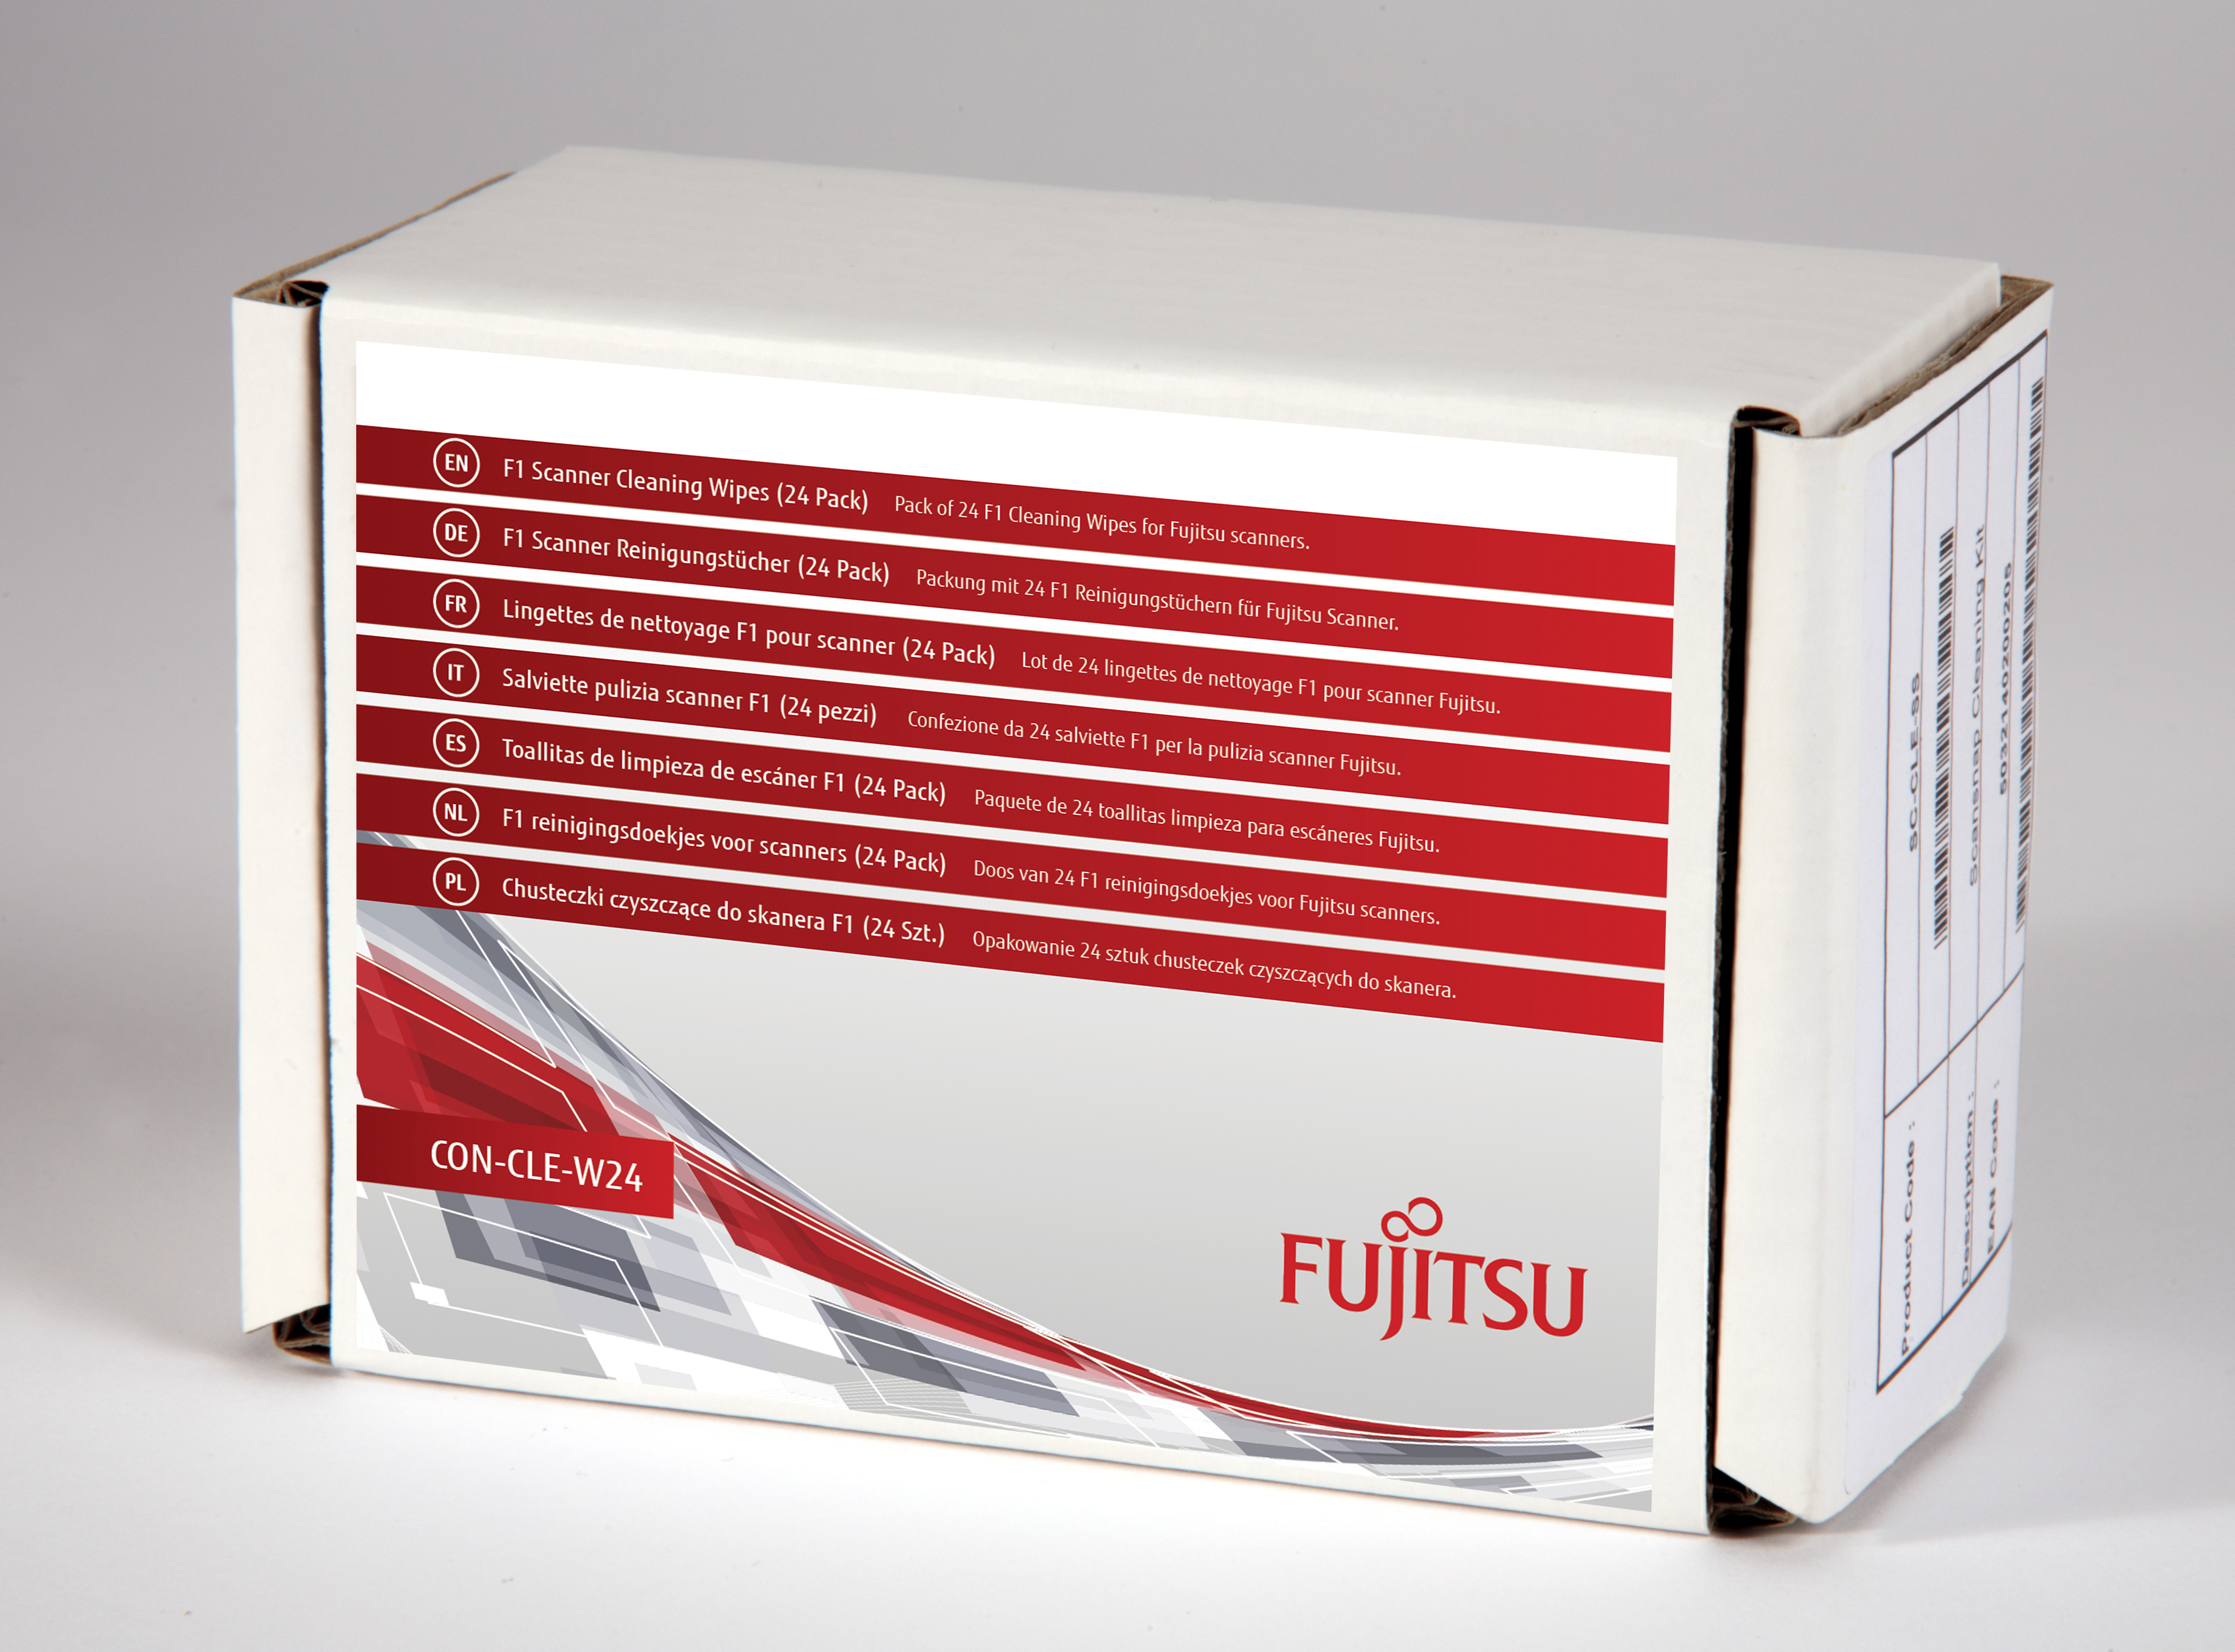 Ricoh Fujitsu F1 Scanner Cleaning Wipes - Reinigungstücher (Wipes)